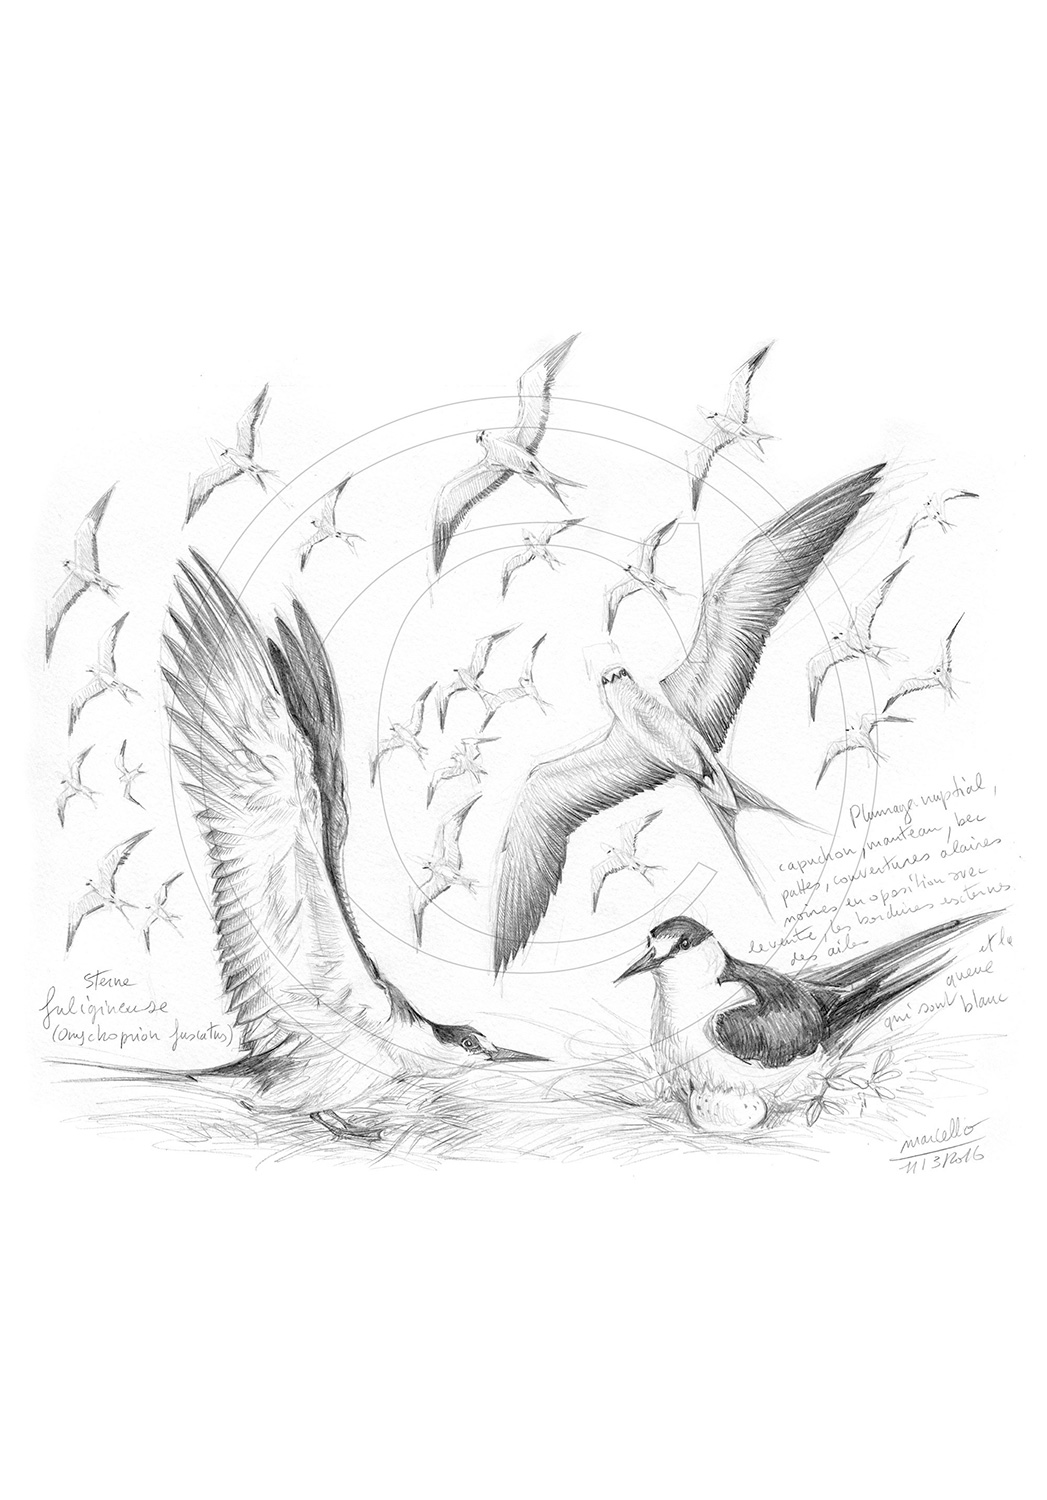 Marcello-art: Ornithology 337 - Sooty terns